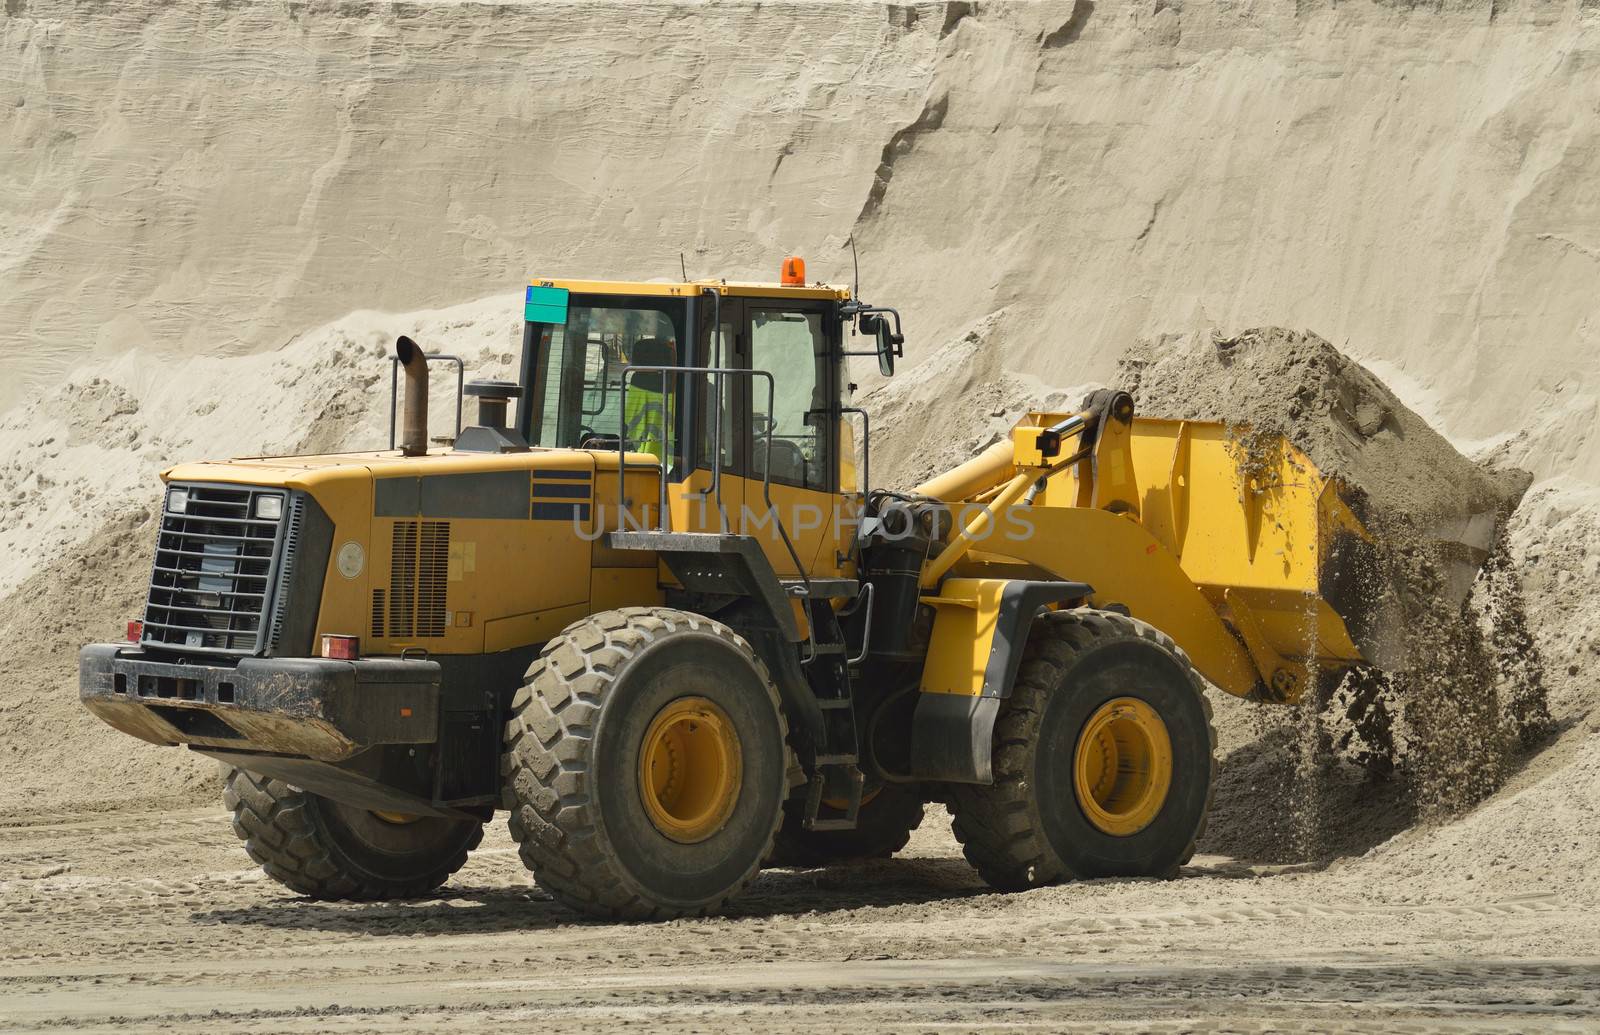 Big yellow bulldozer working on construction site